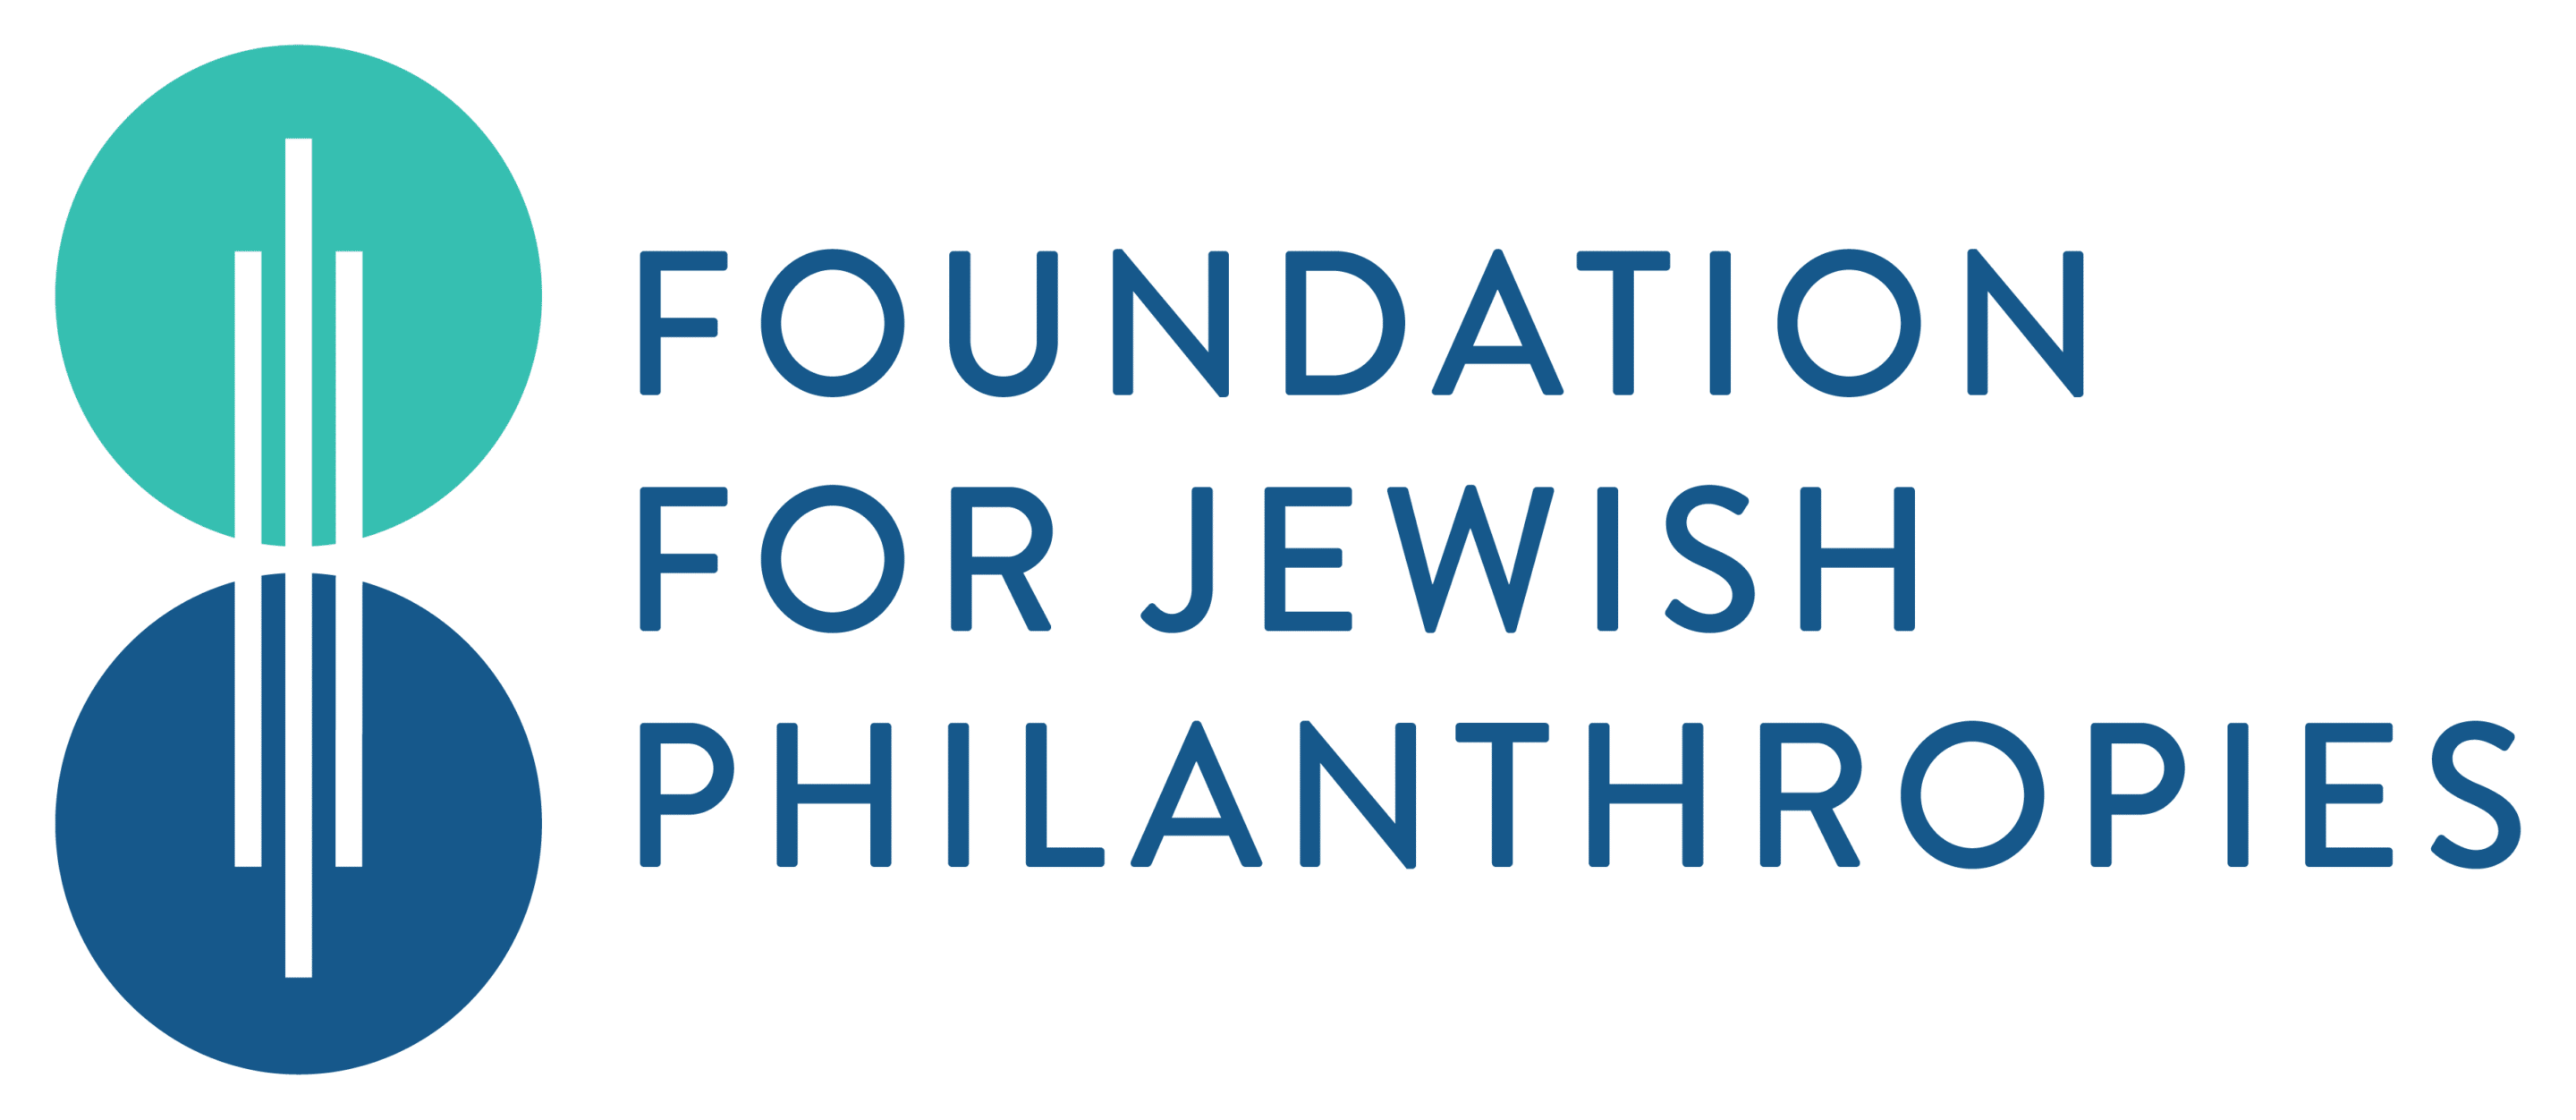 Corporate Sponsorship Page - foundation logo